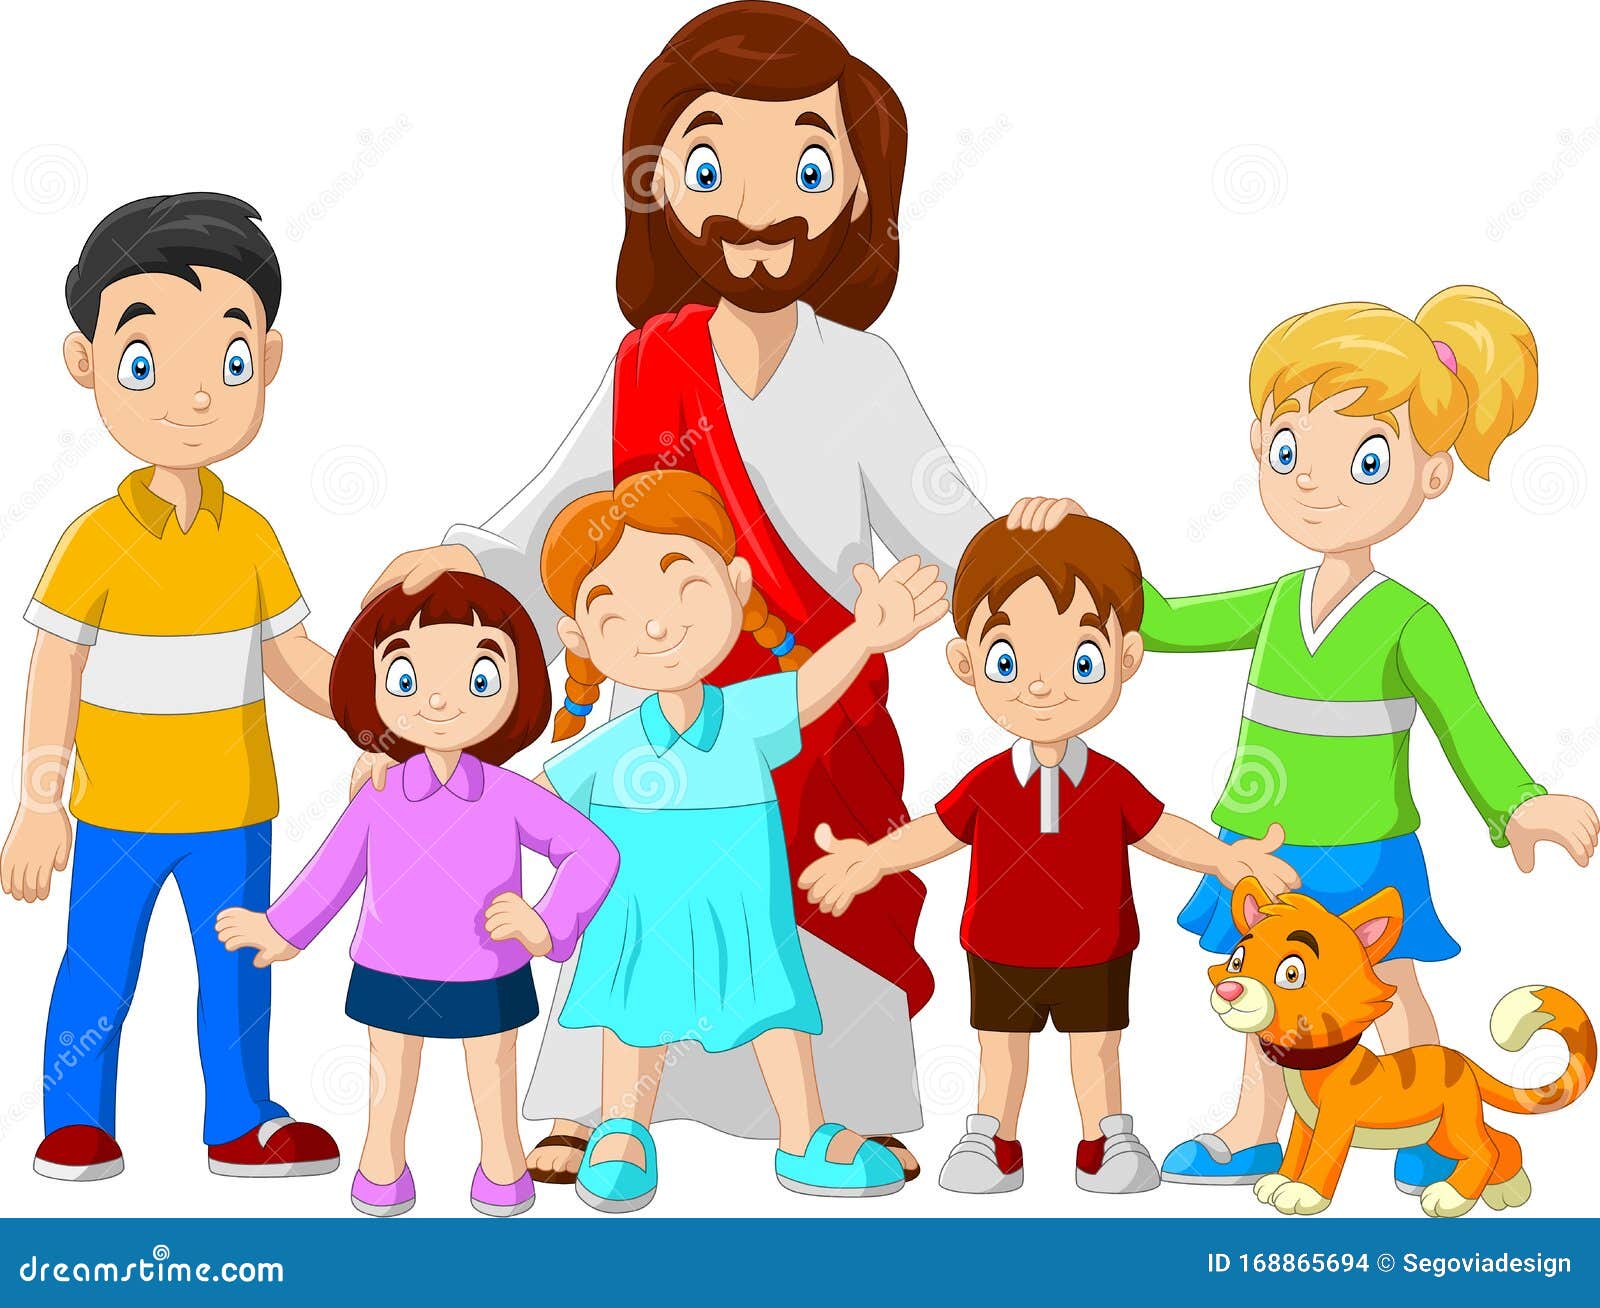 Cartoon Jesus Christus with Children Stock Vector - Illustration of ...